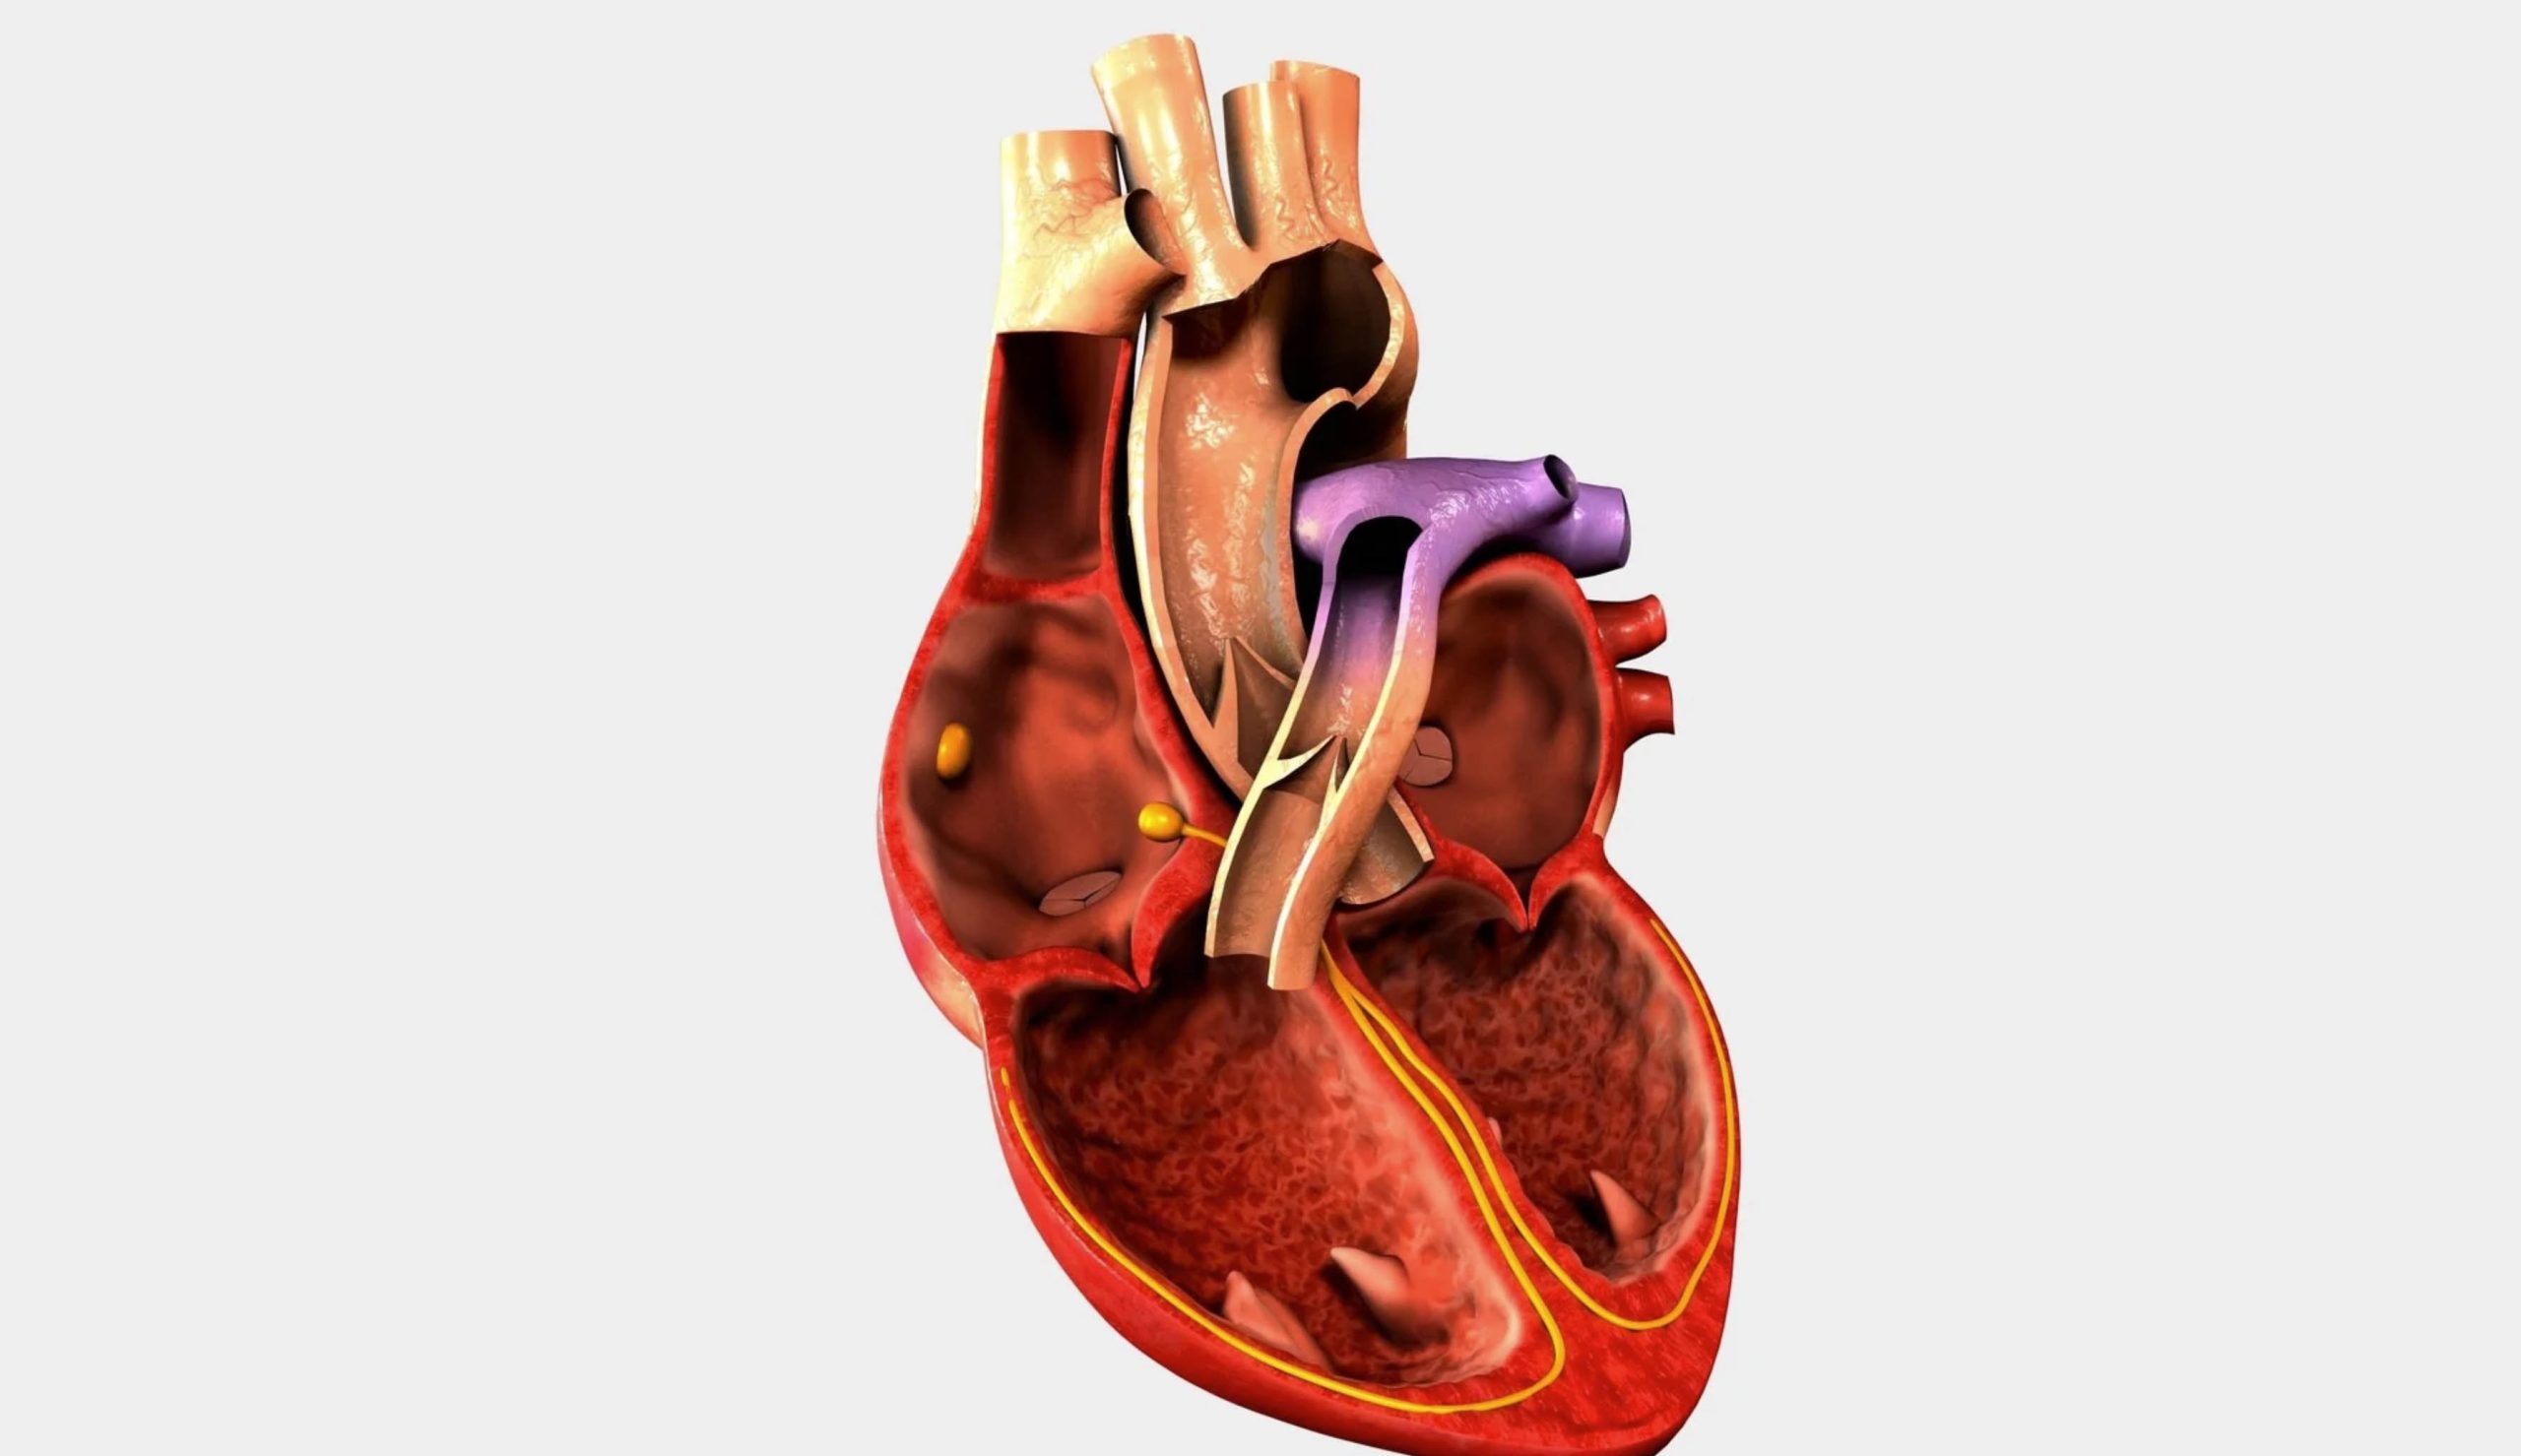 ACGrace - A 3d model of a human heart.